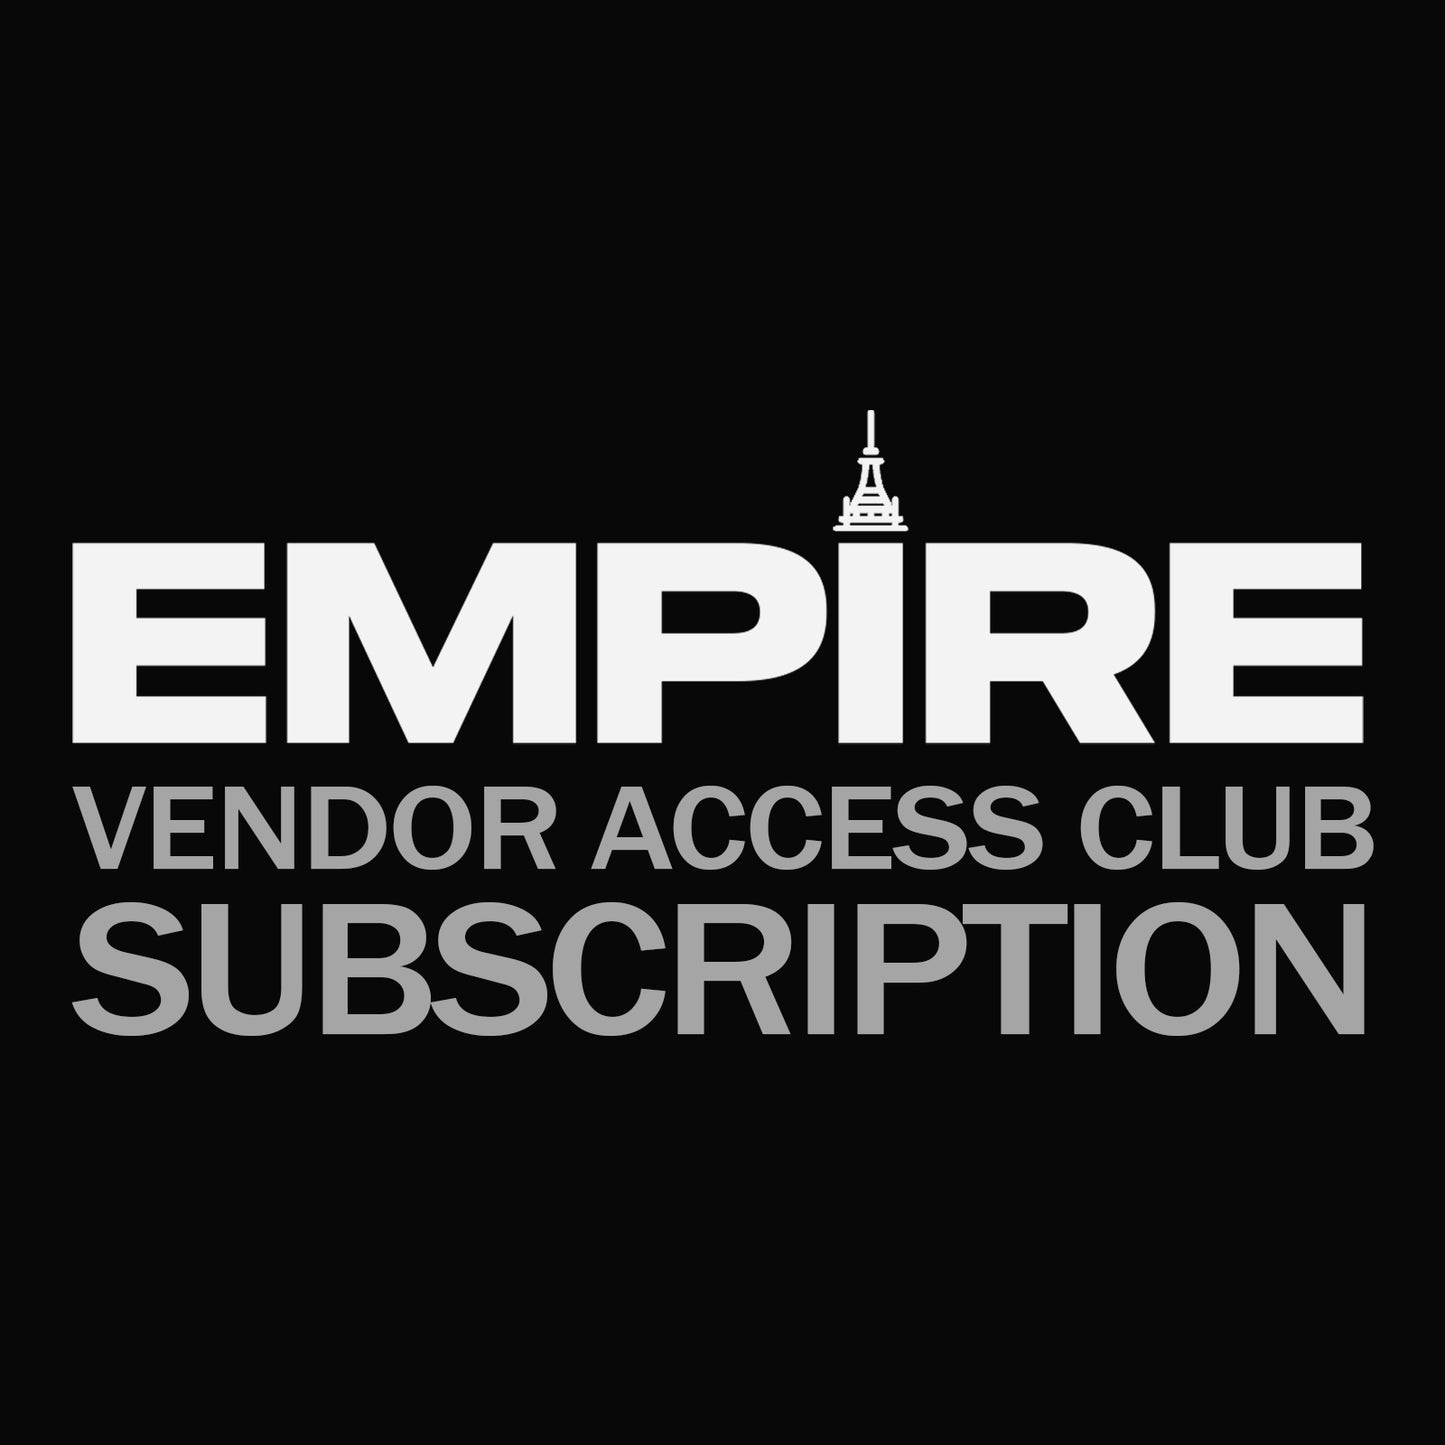 Exclusive Vendor Access Club Subscription